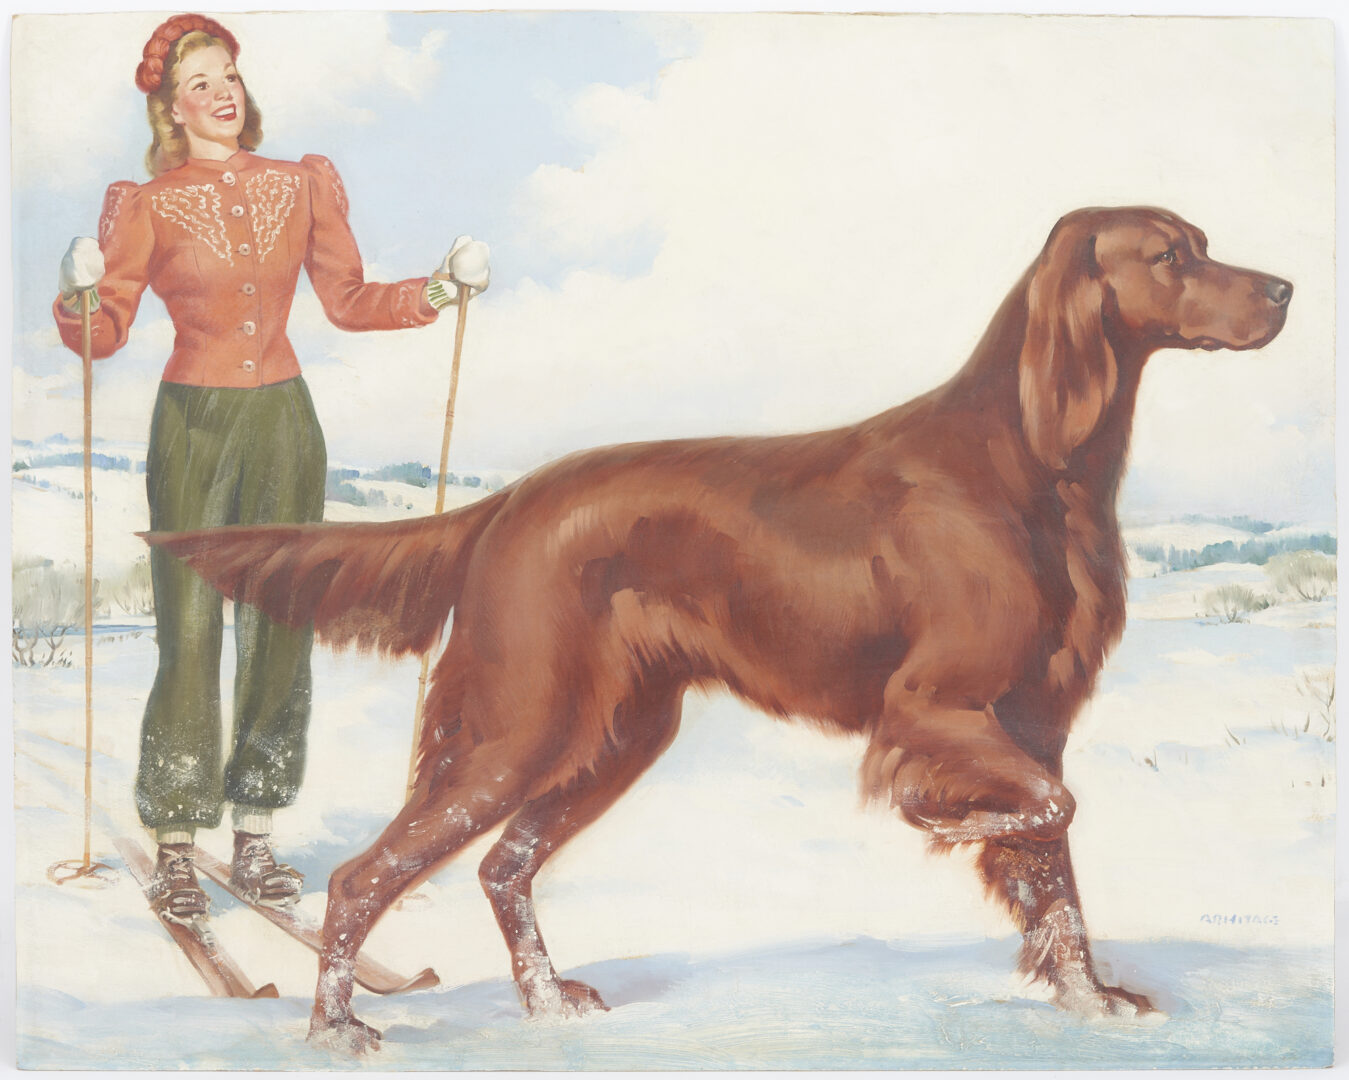 Lot 340: Arnold Armitage Pinup Illustration Art O/B, Skier and Dog